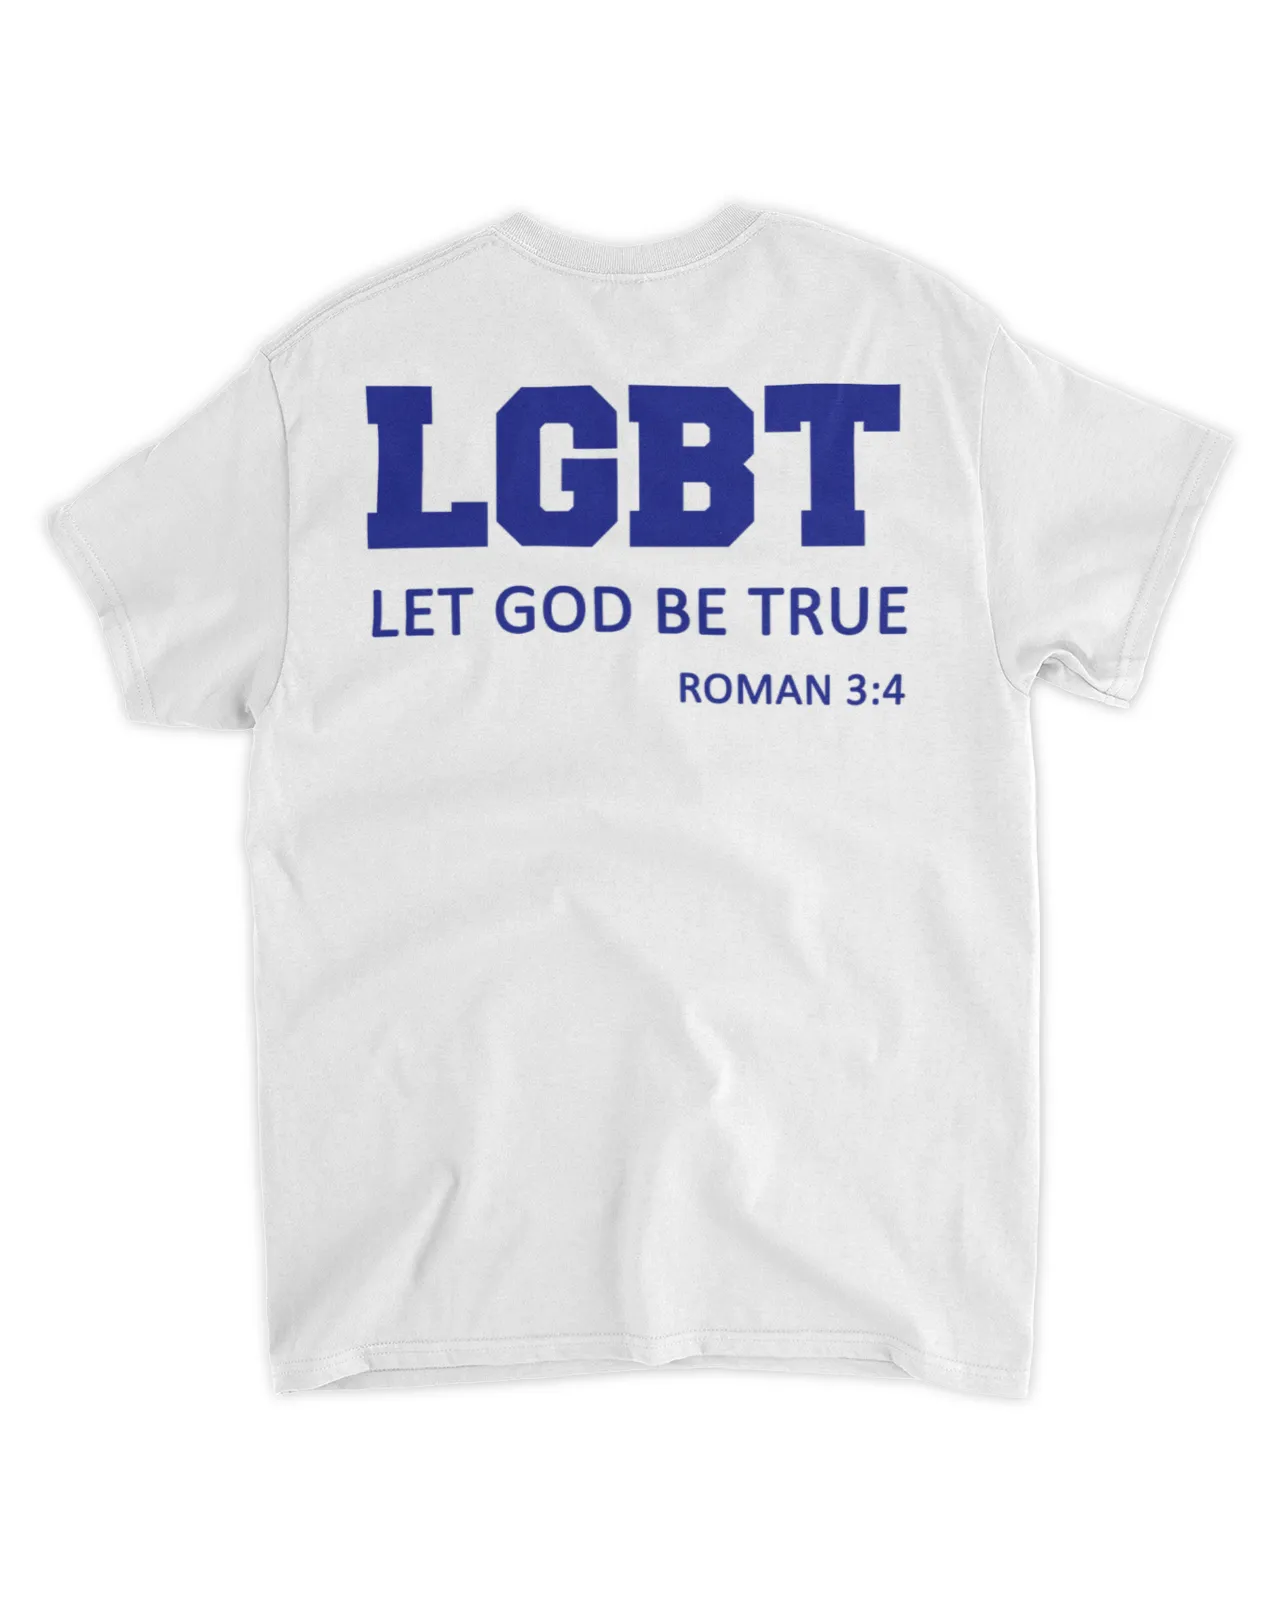  LGBT Let god be true shirt